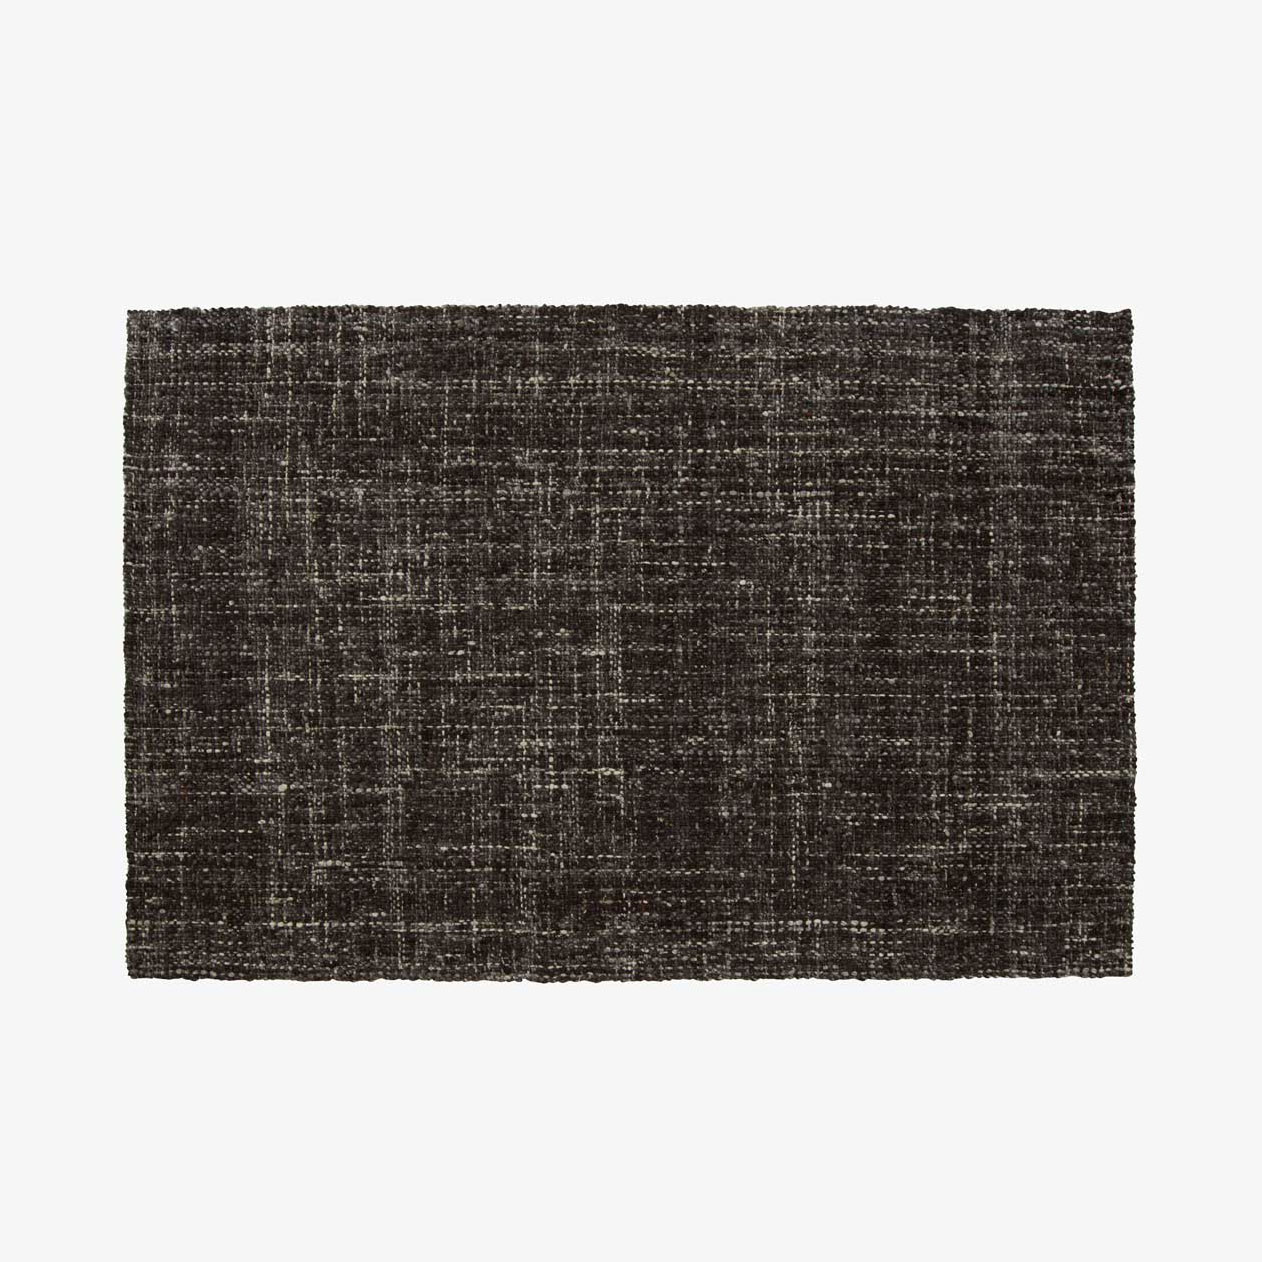 Image 地毯 noir & blanc  1